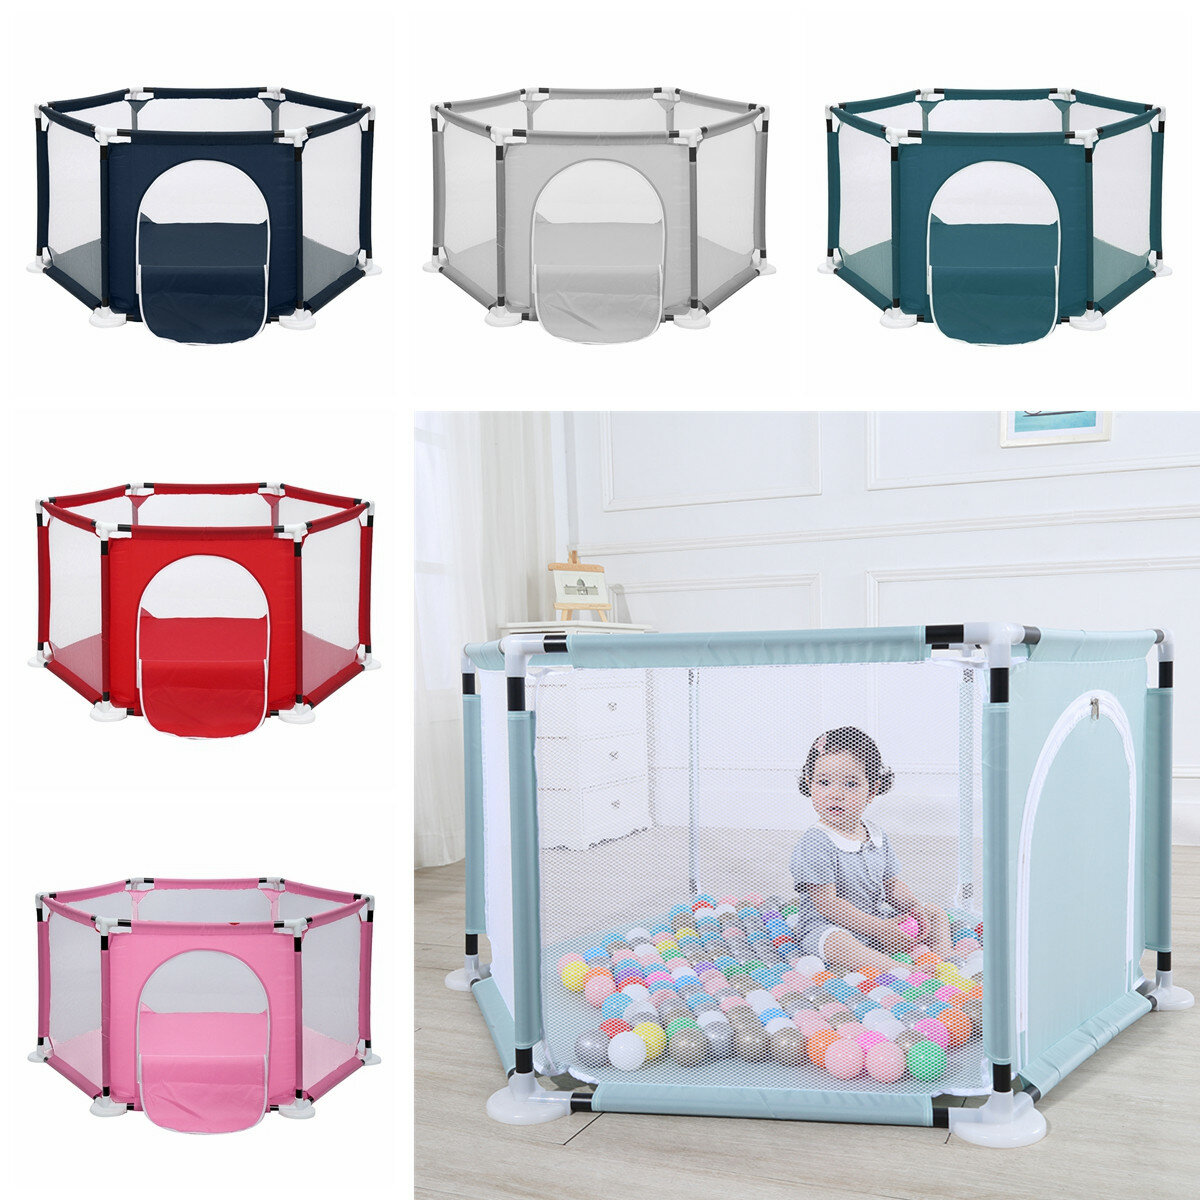 3-6 Years Baby Safety Playpen Baby Fence Gate Foldable Interactive Indoor Outdoor Playpen Children K